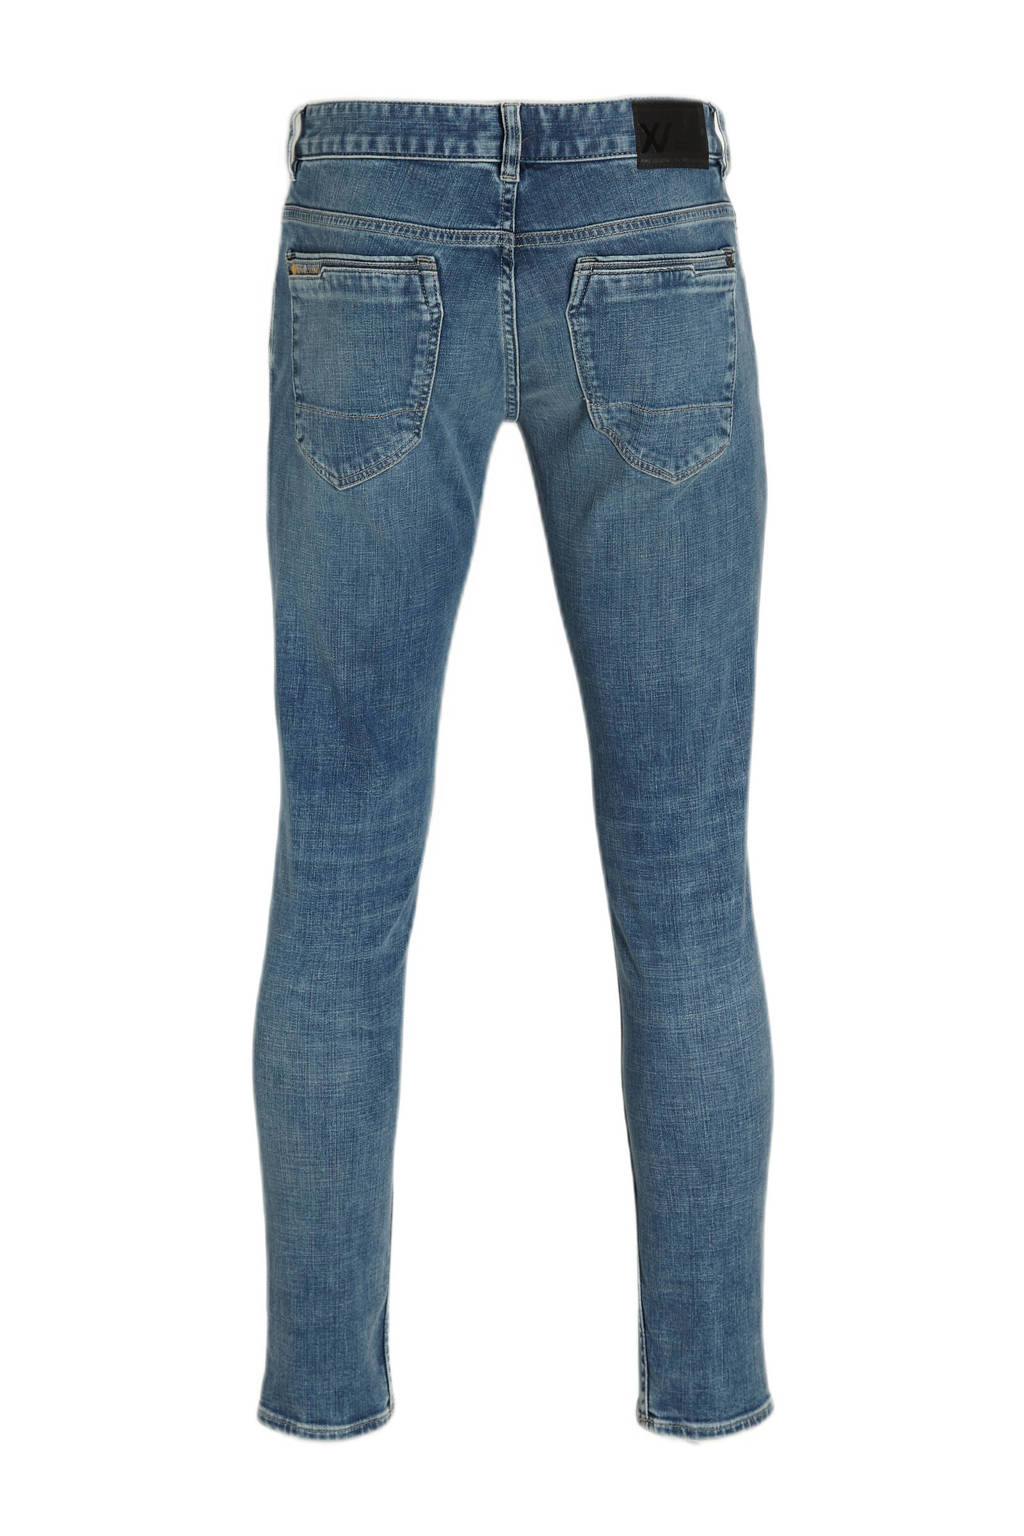 PME Legend slim fit jeans XV DENIM air bright blue | Union River